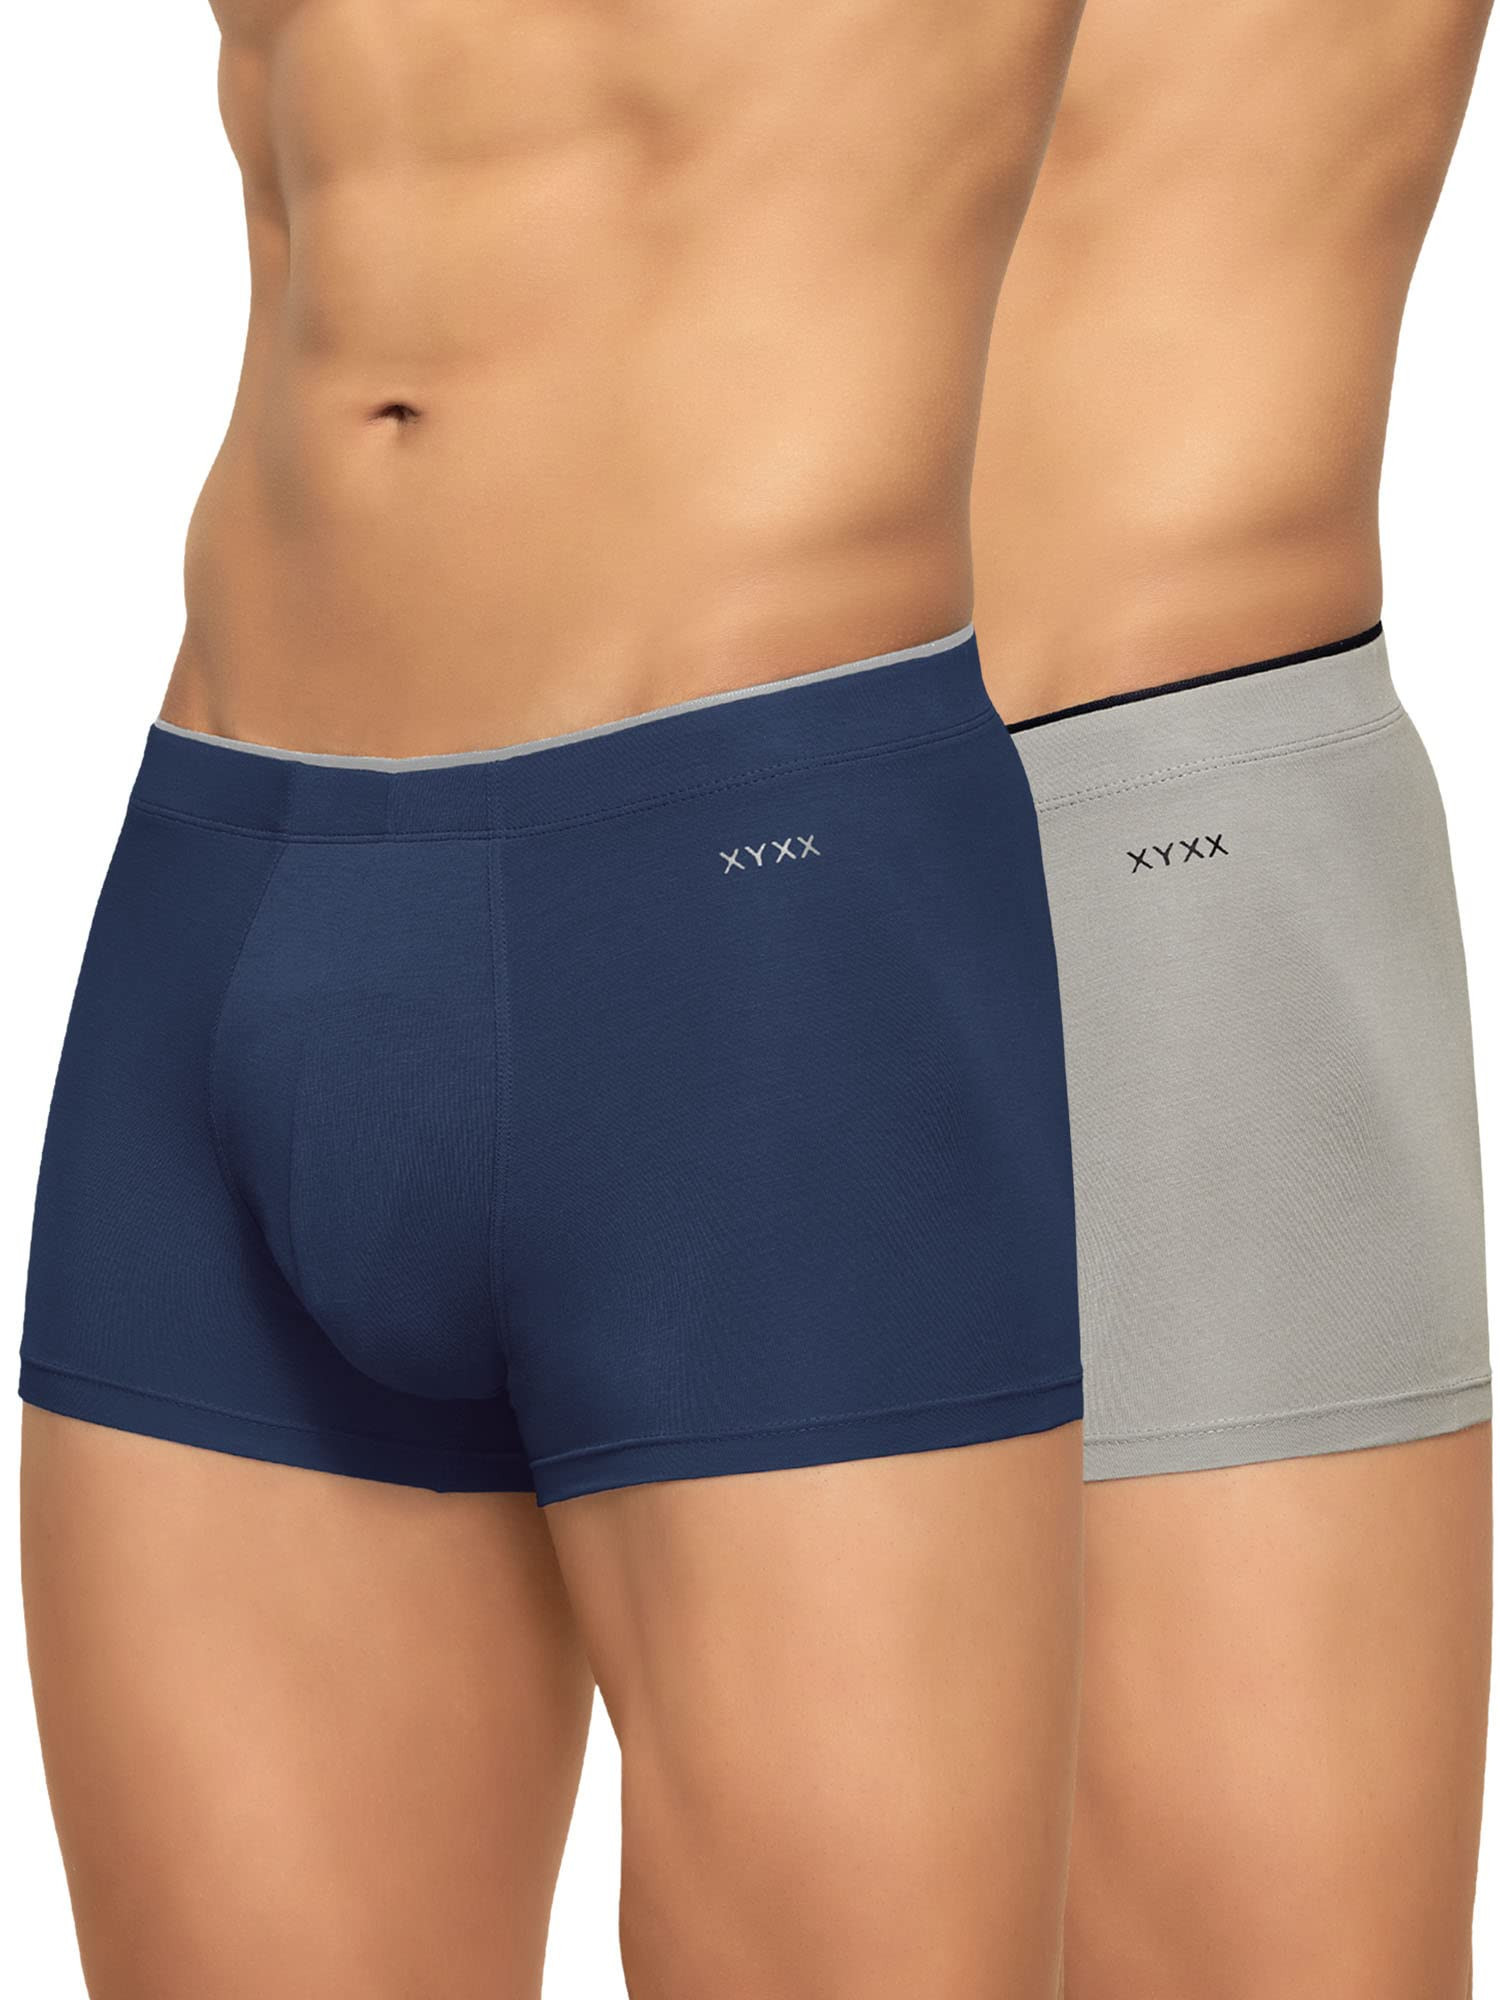 XYXX Men's Underwear Uno IntelliSoft Antimicrobial Micro Modal Trunk Pack  of 2 (Dress Blue ; Heather Grey;